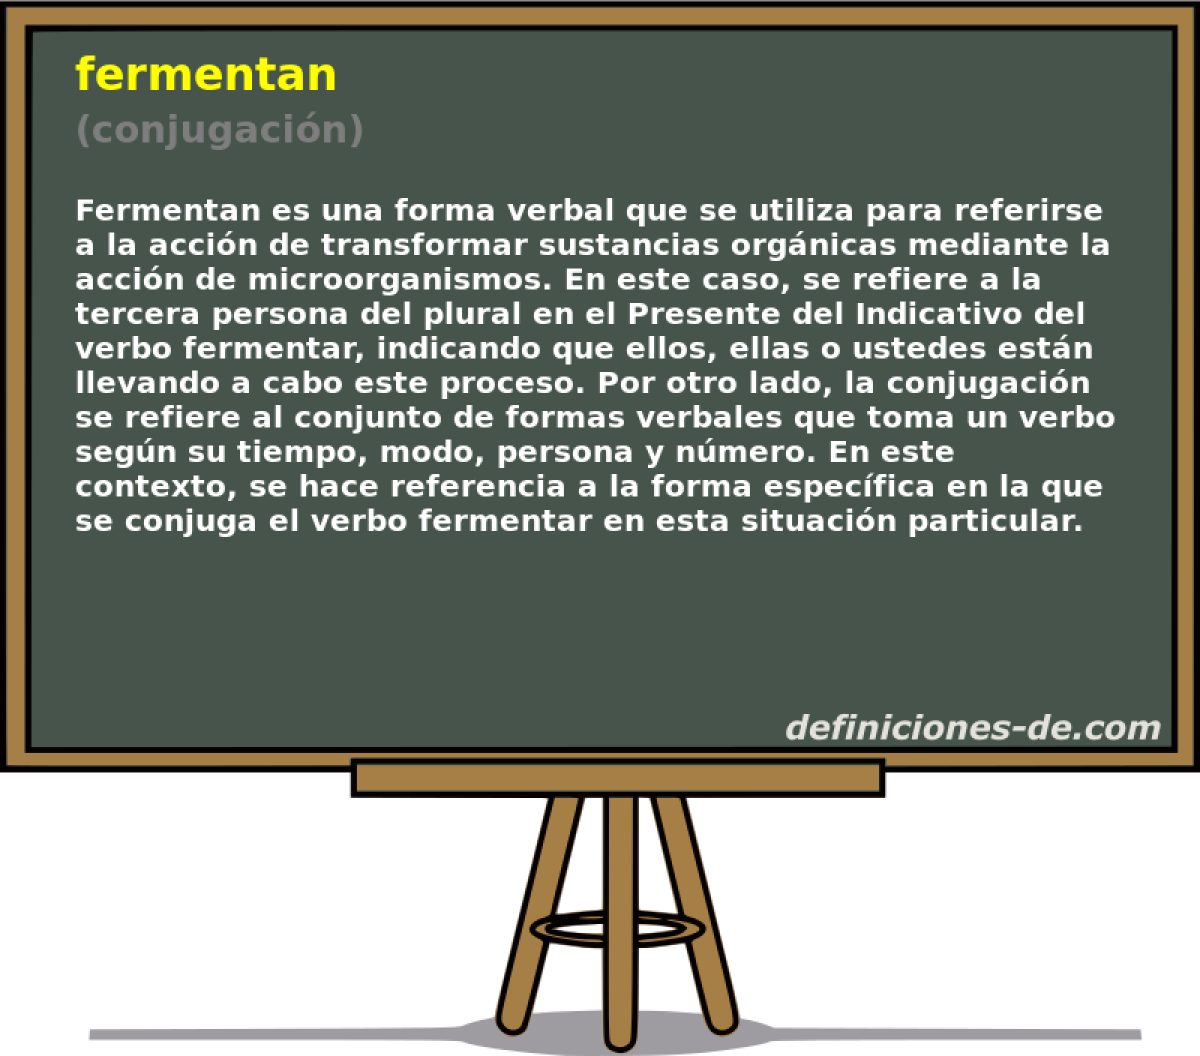 fermentan (conjugacin)